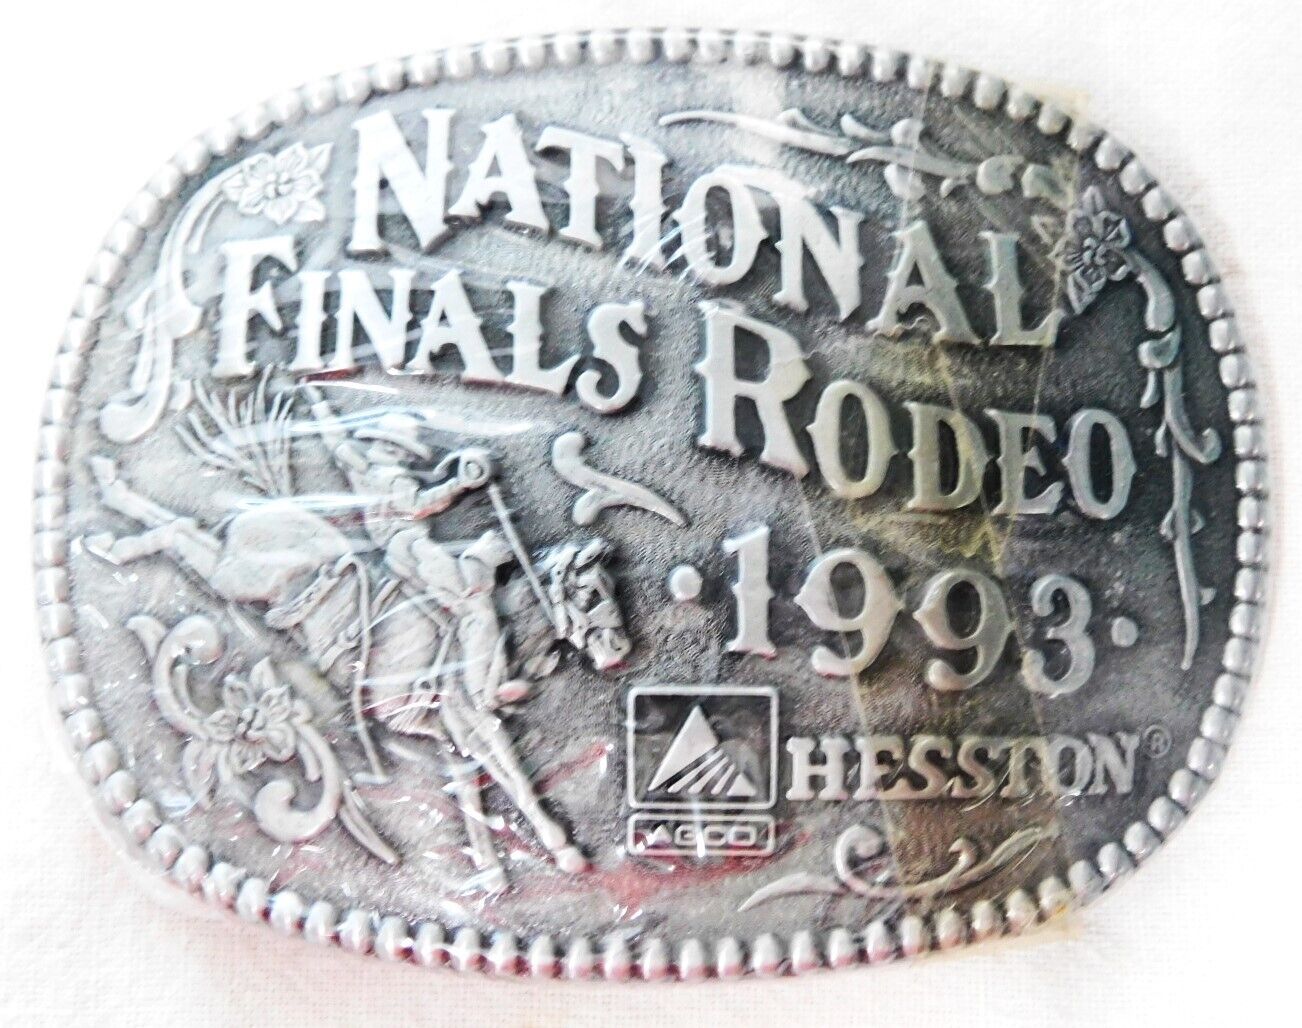 NOS 1993 HESSTON NATIONAL FINALS RODEO BELT BUCKLE - ORIGINAL WRAPPER